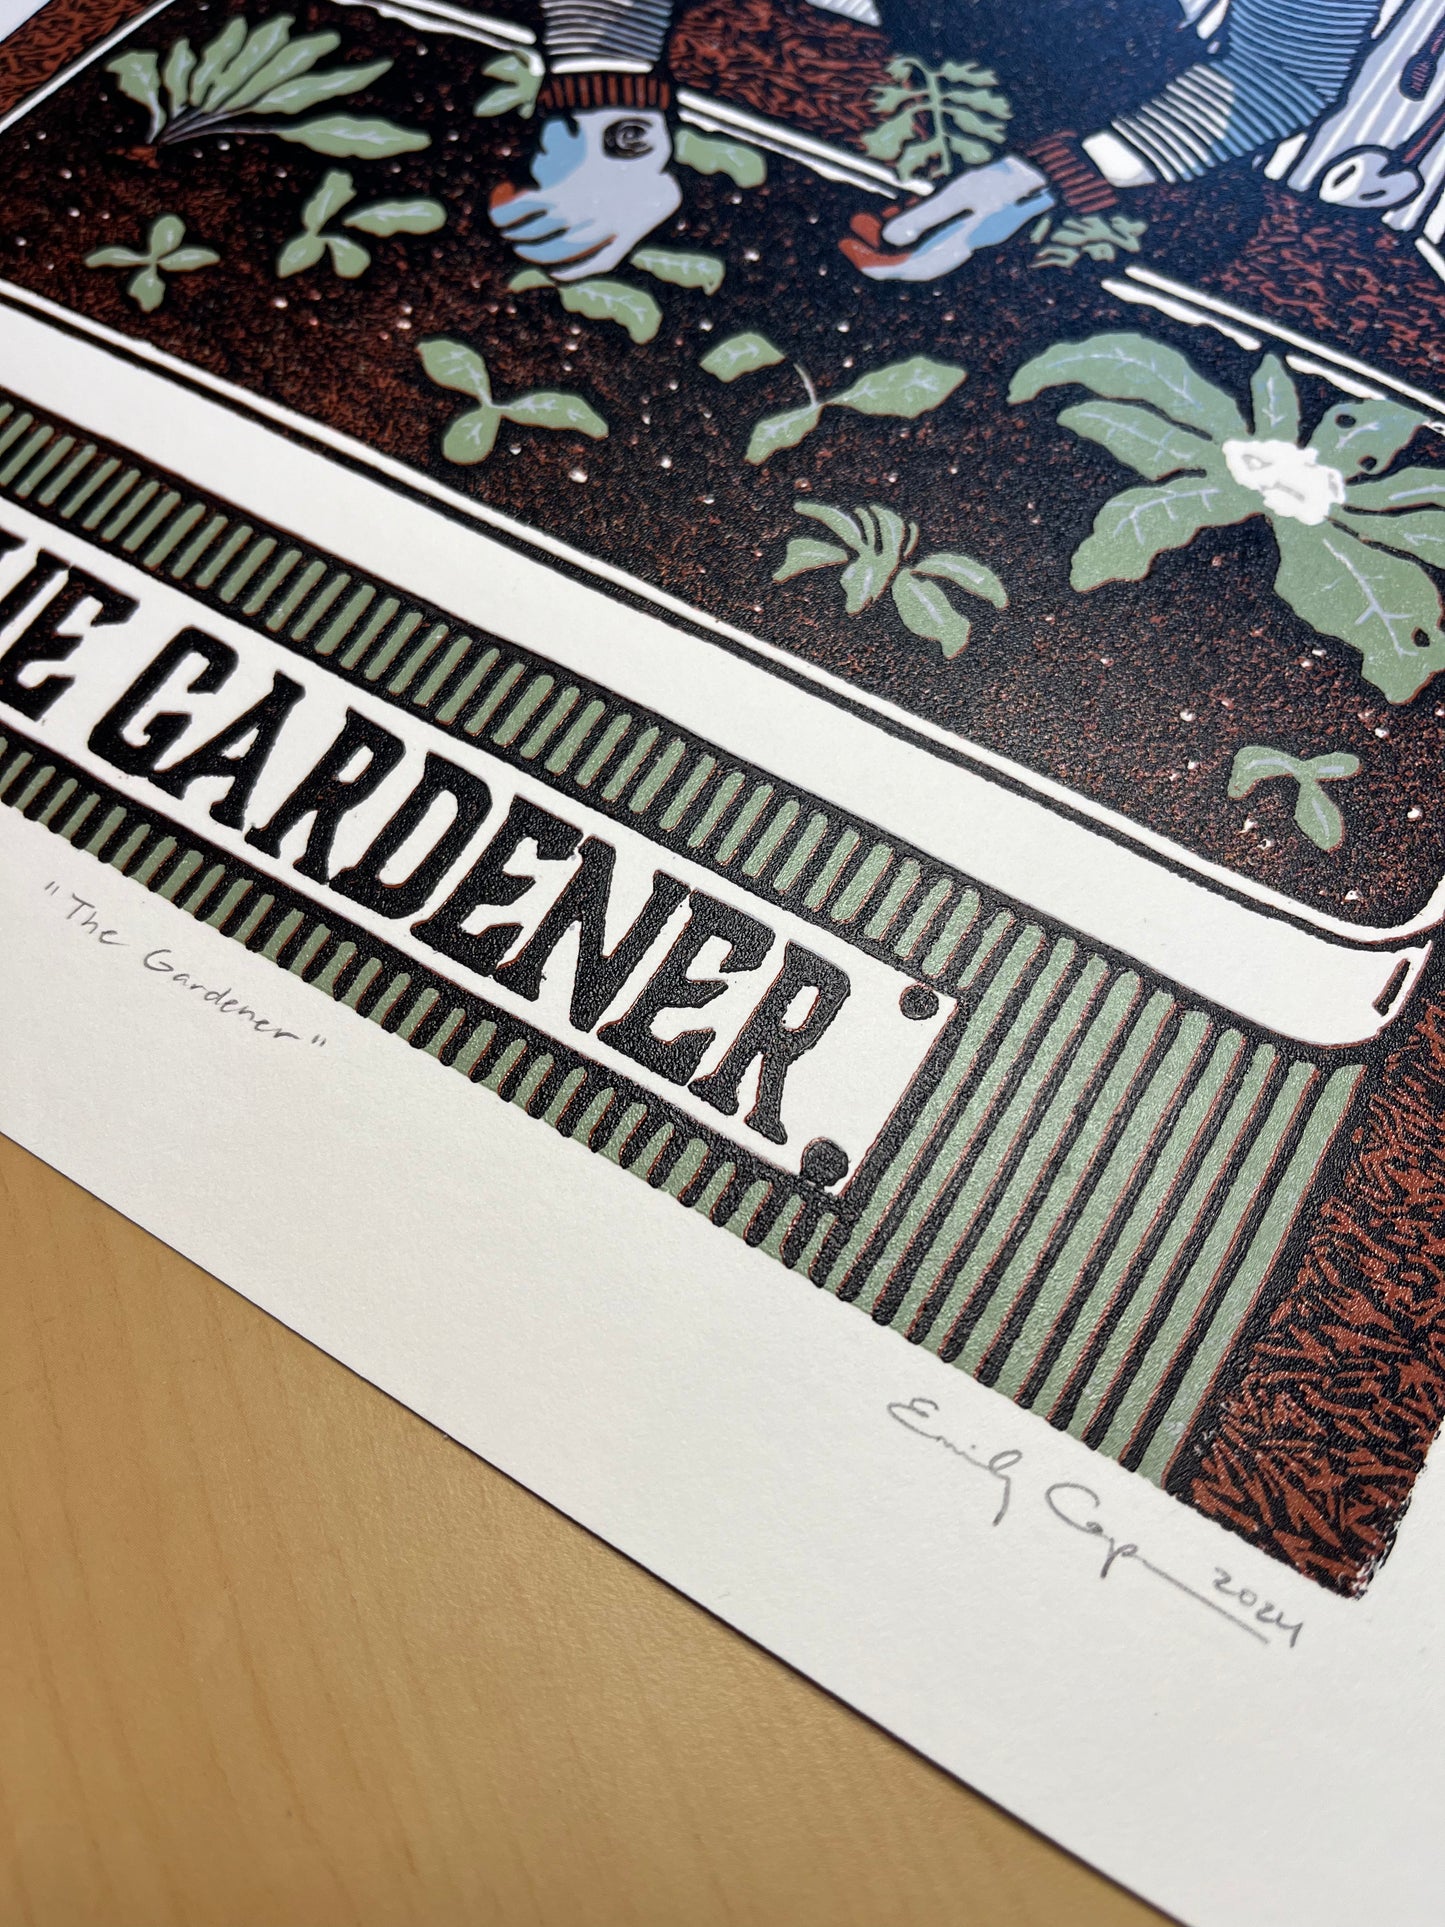 "The Gardener" Original Limited Edition Reduction Linoleum Block Print - Oracle Deck Series